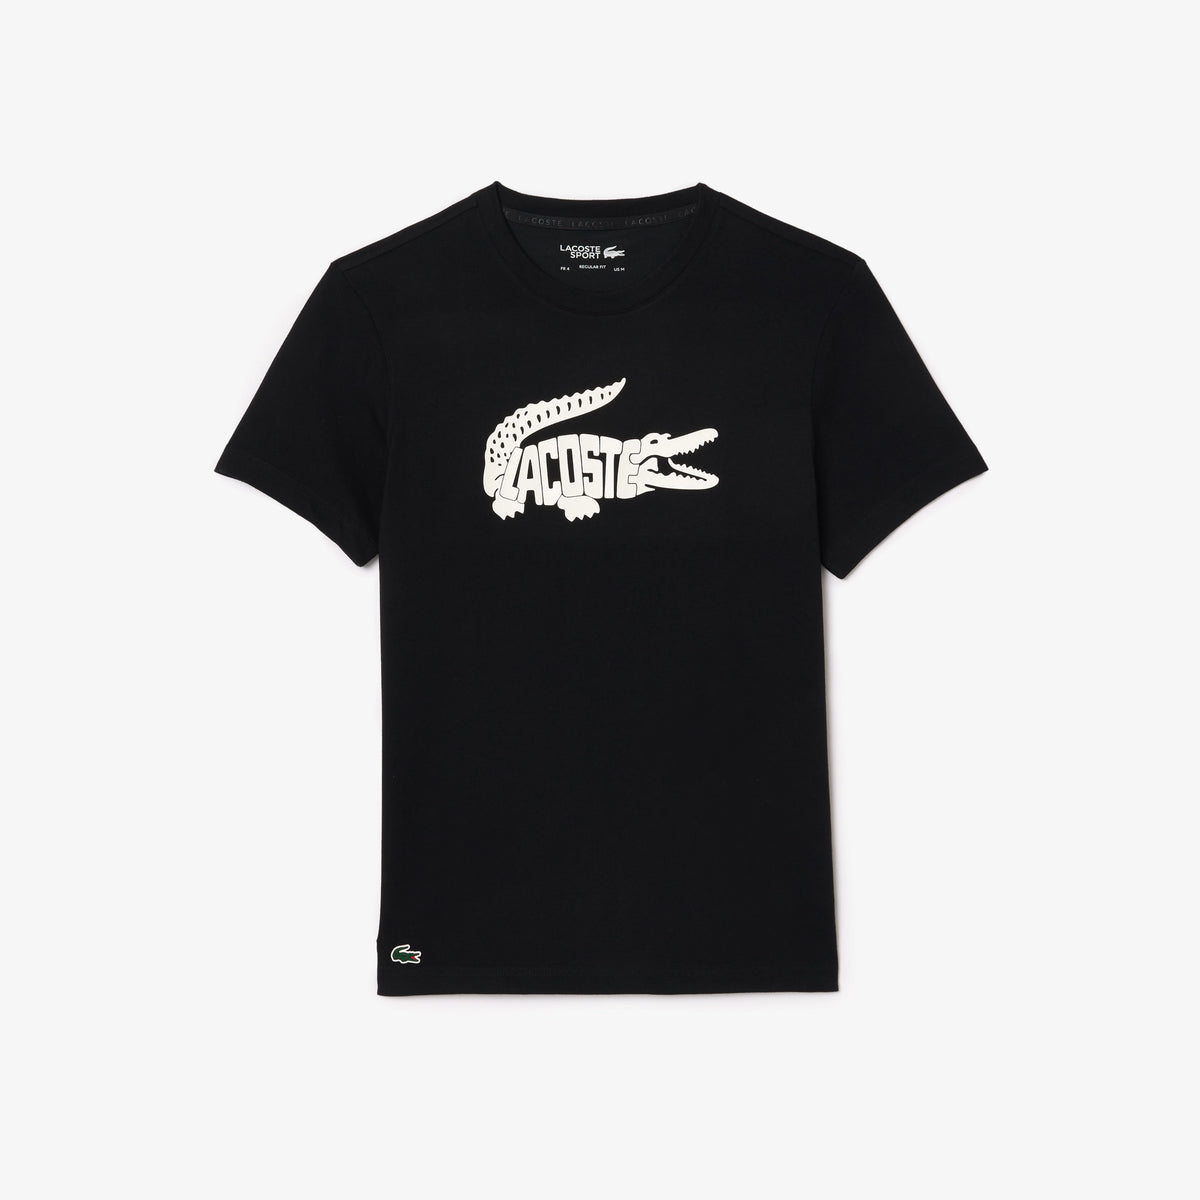 Sport Ultra-Dry Croc Print T-Shirt - Black/White